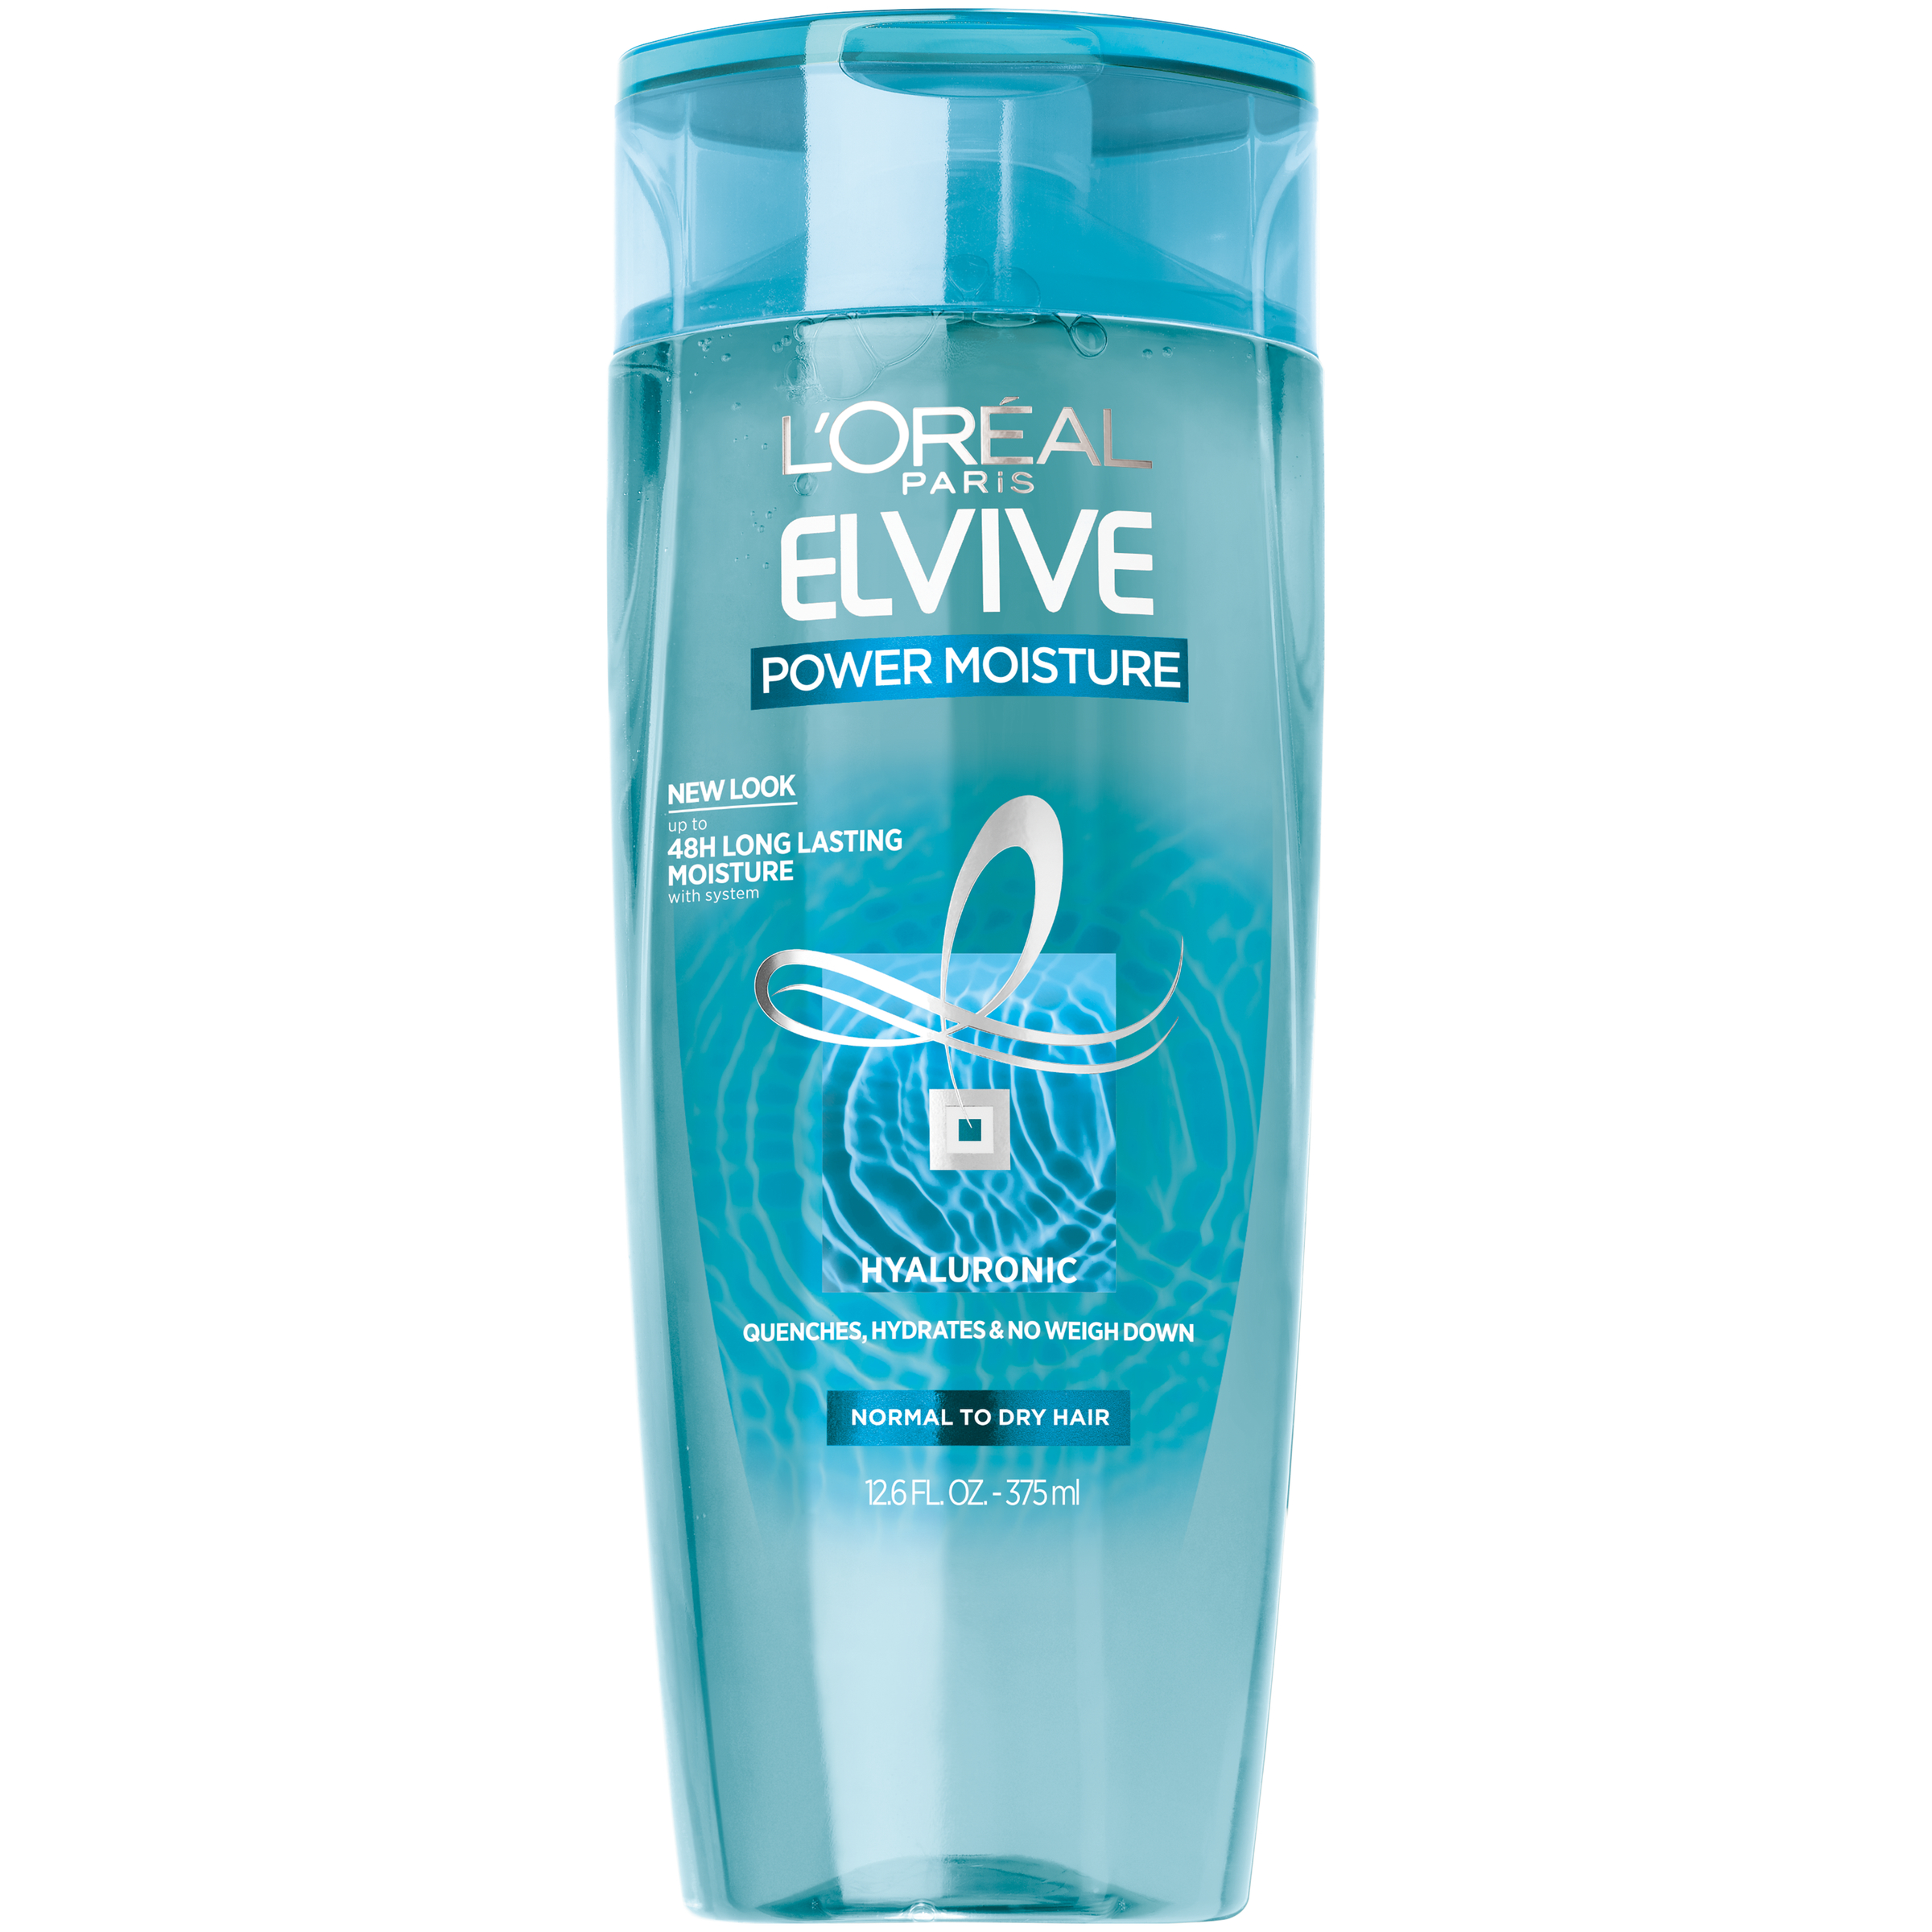 L'Oreal Advanced Haircare Power Moisture Hydrating Shampoo, 12.6 fl oz